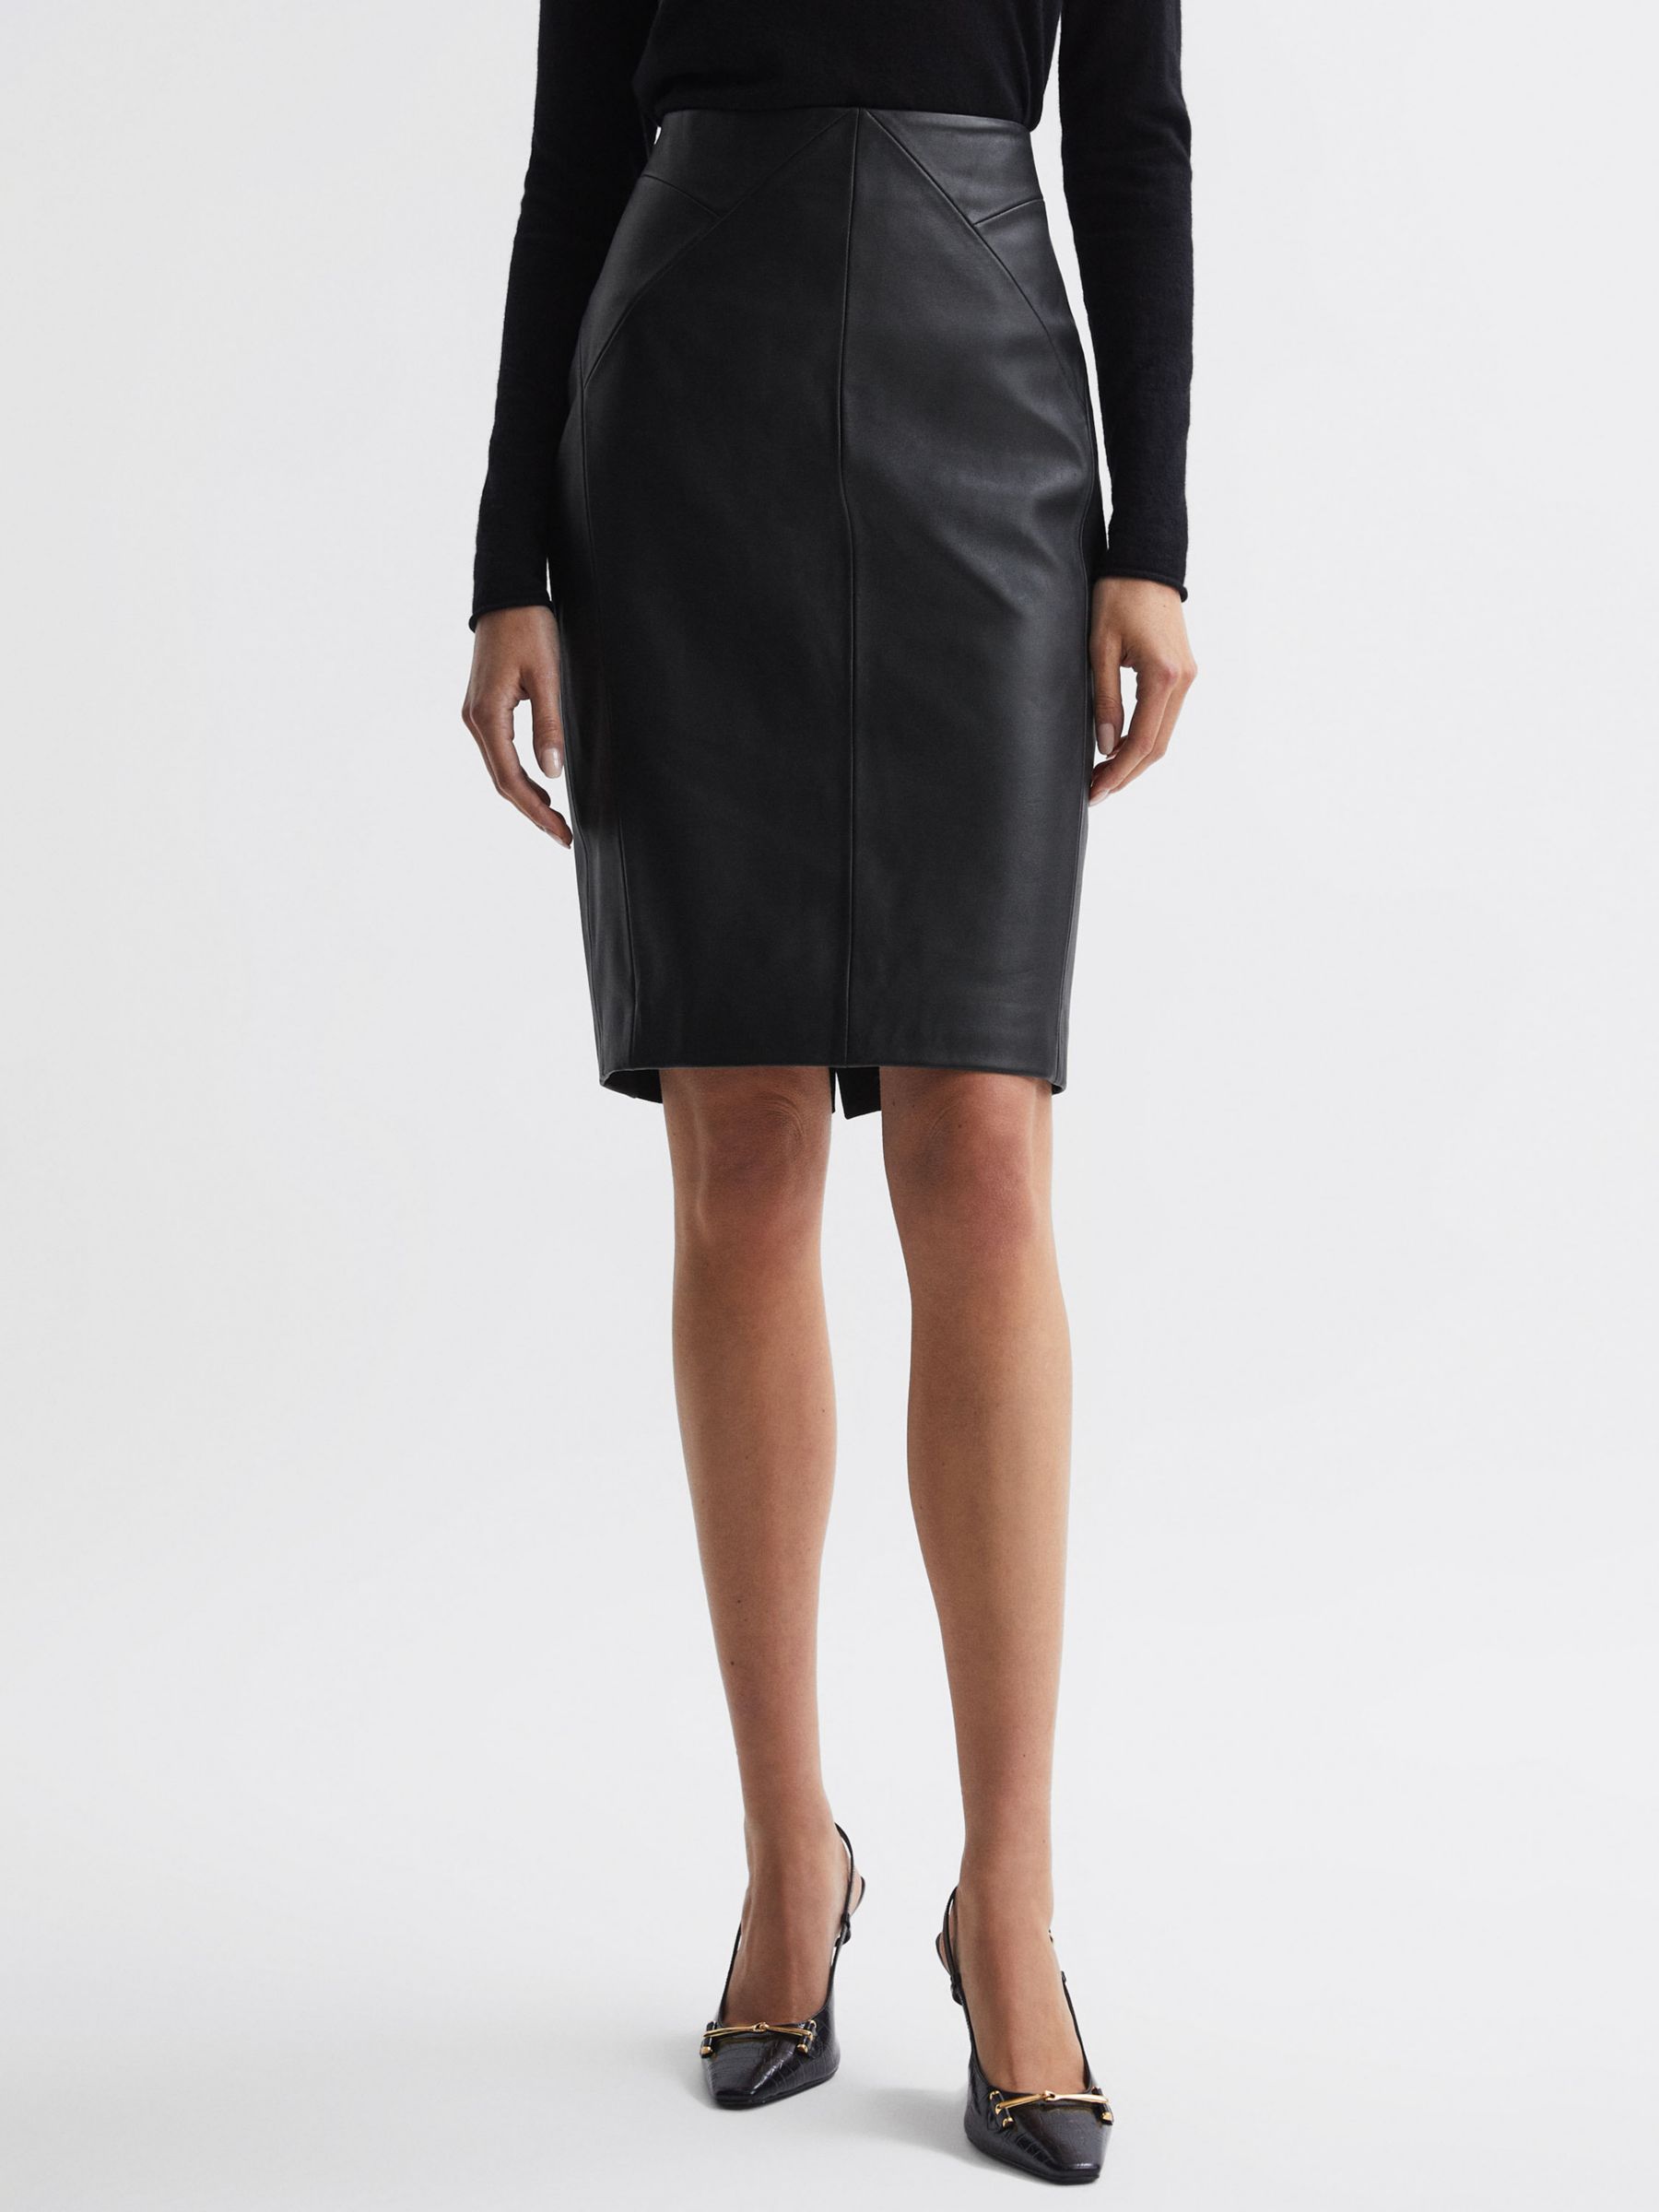 Reiss Raya Leather Pencil Skirt, Black at John Lewis & Partners